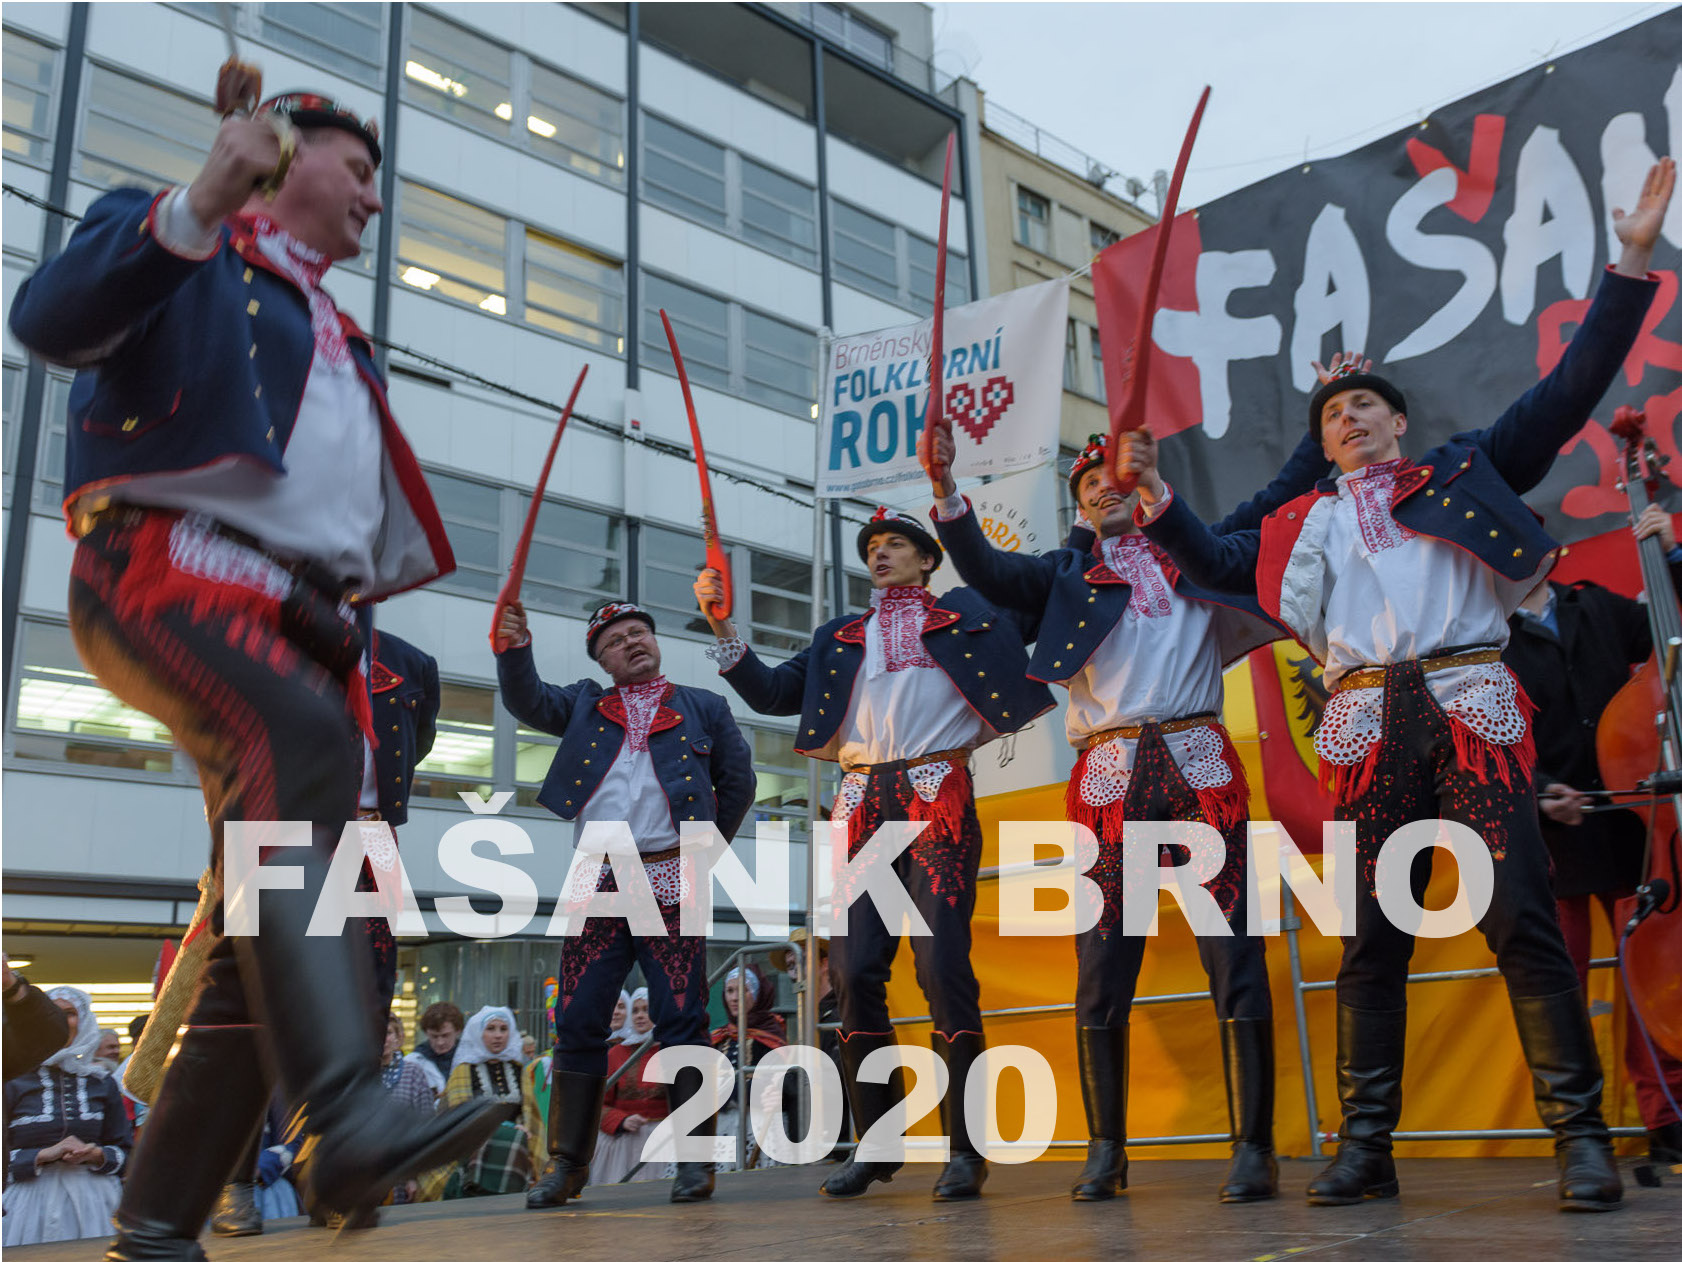 Fasank_Brno_2020